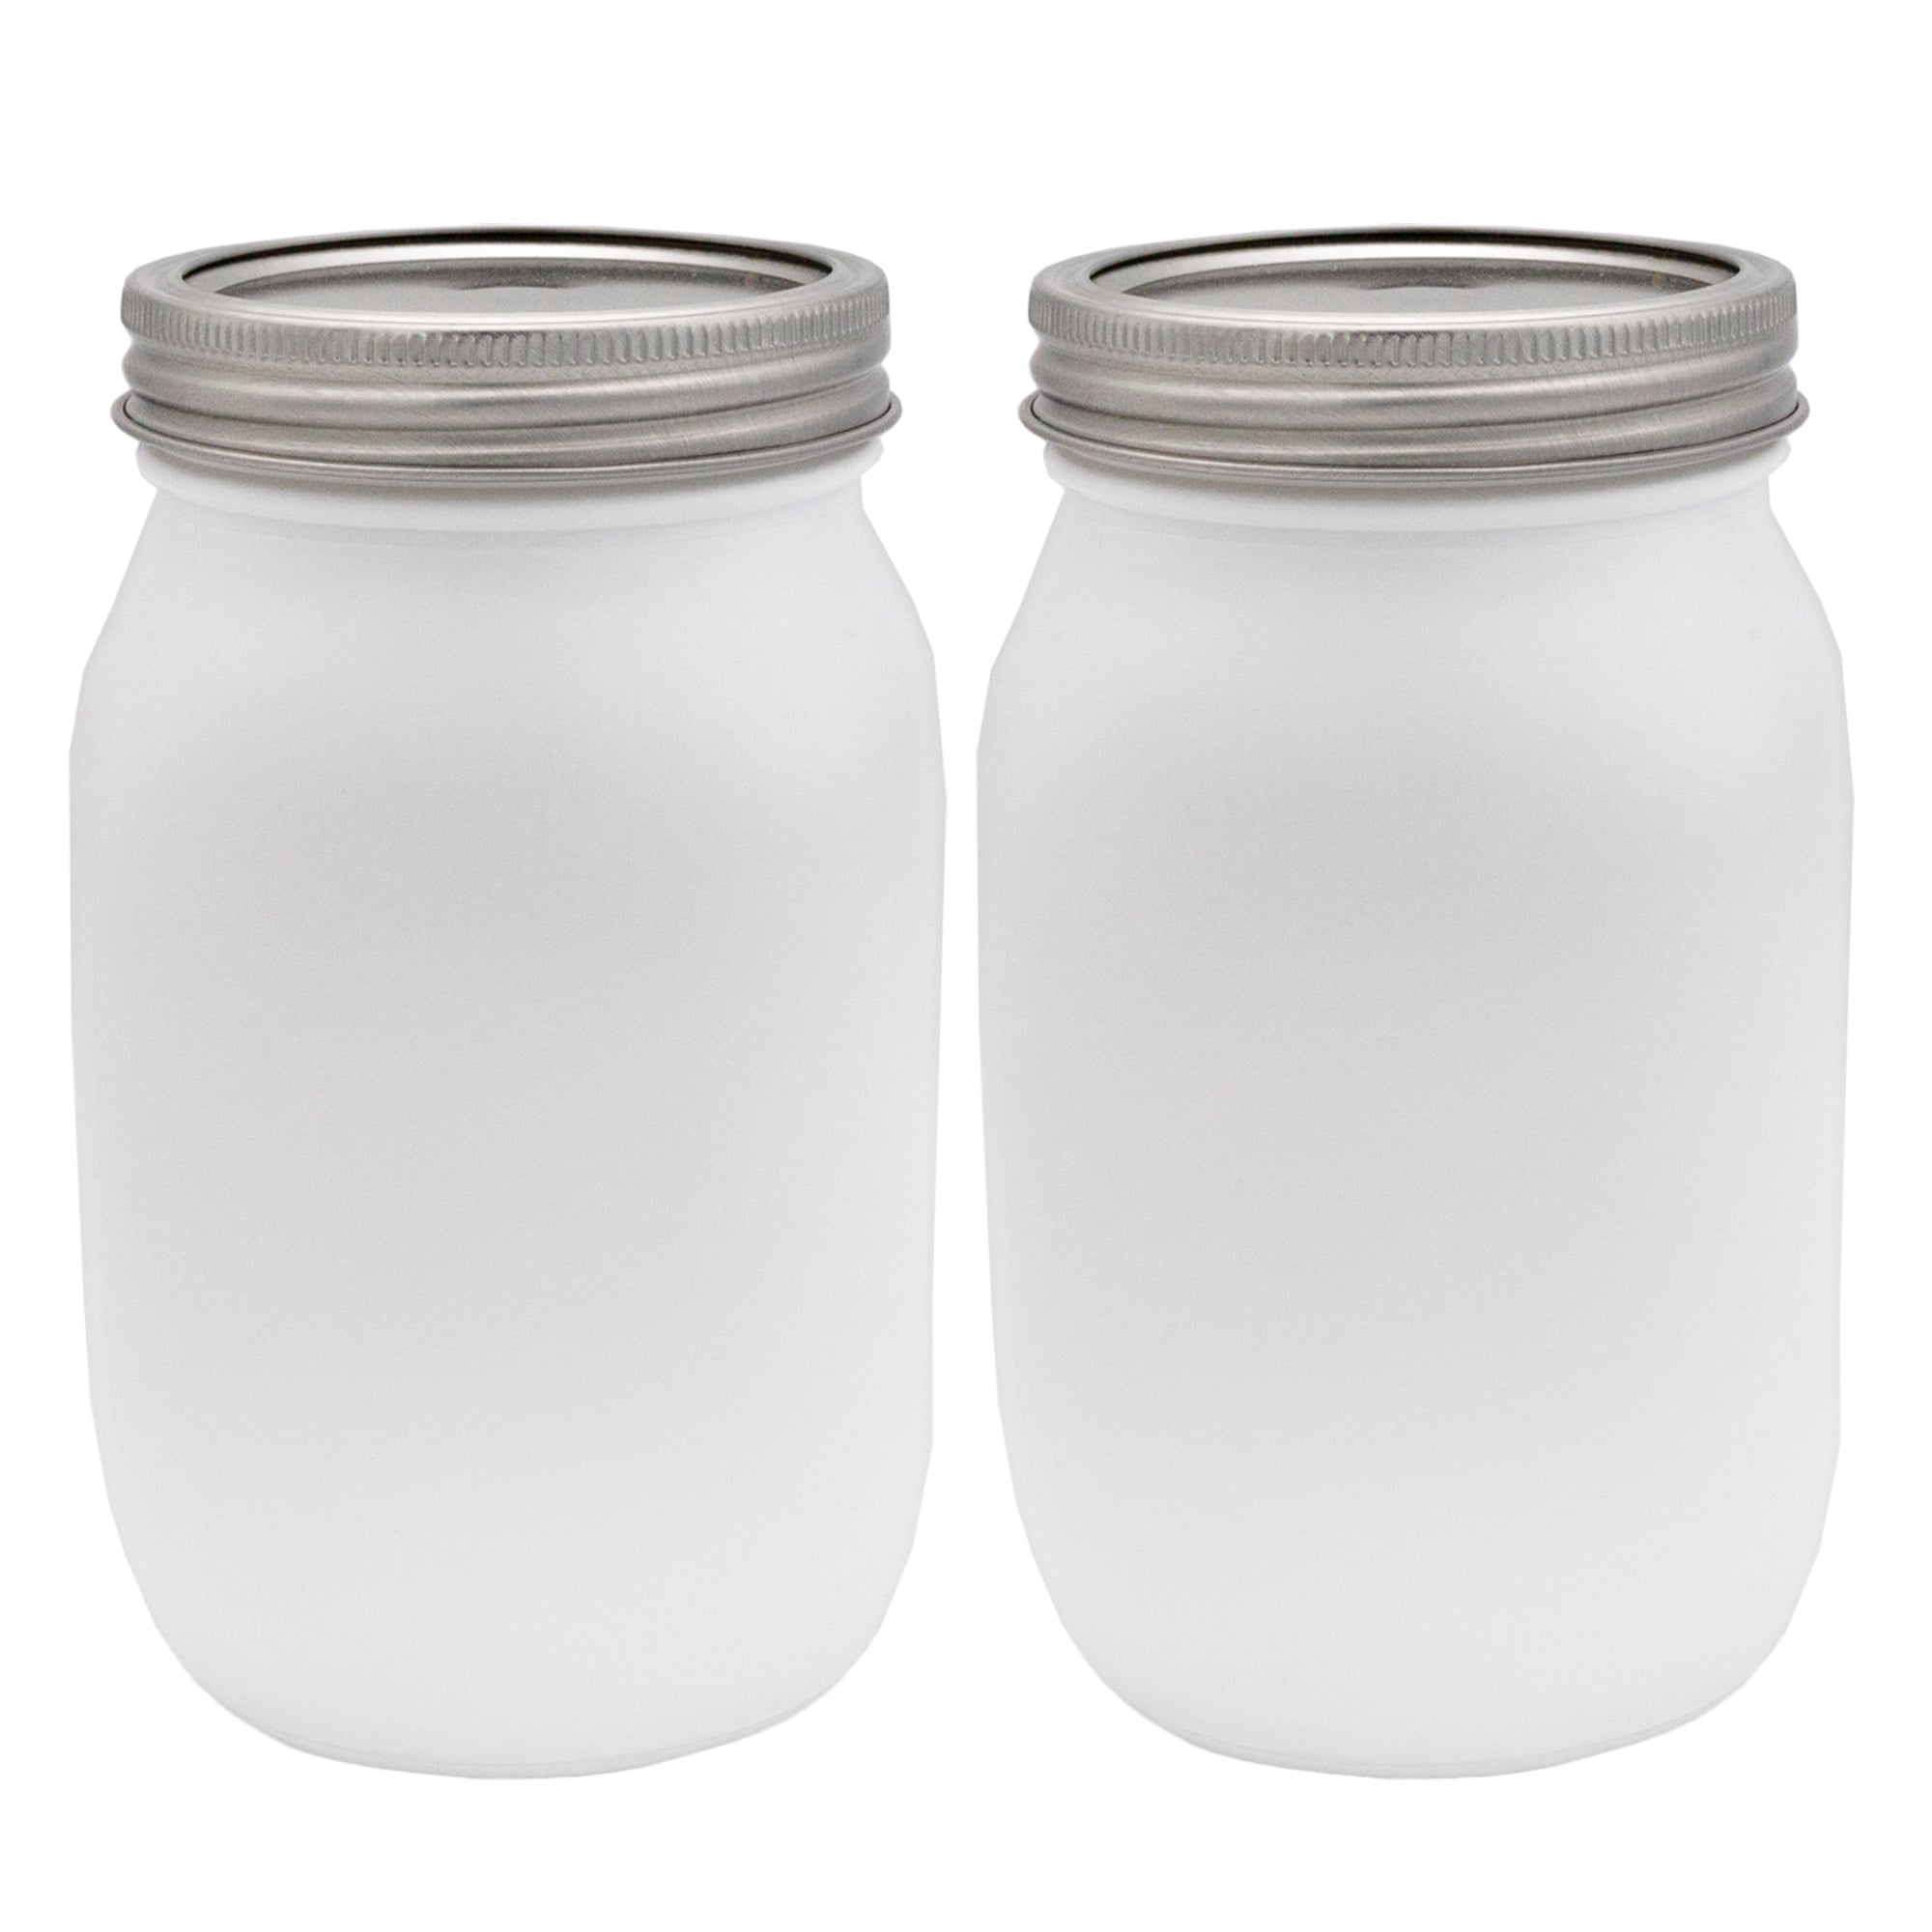  ANSQU Set of 2 Decorative Mason Jars with Airtight